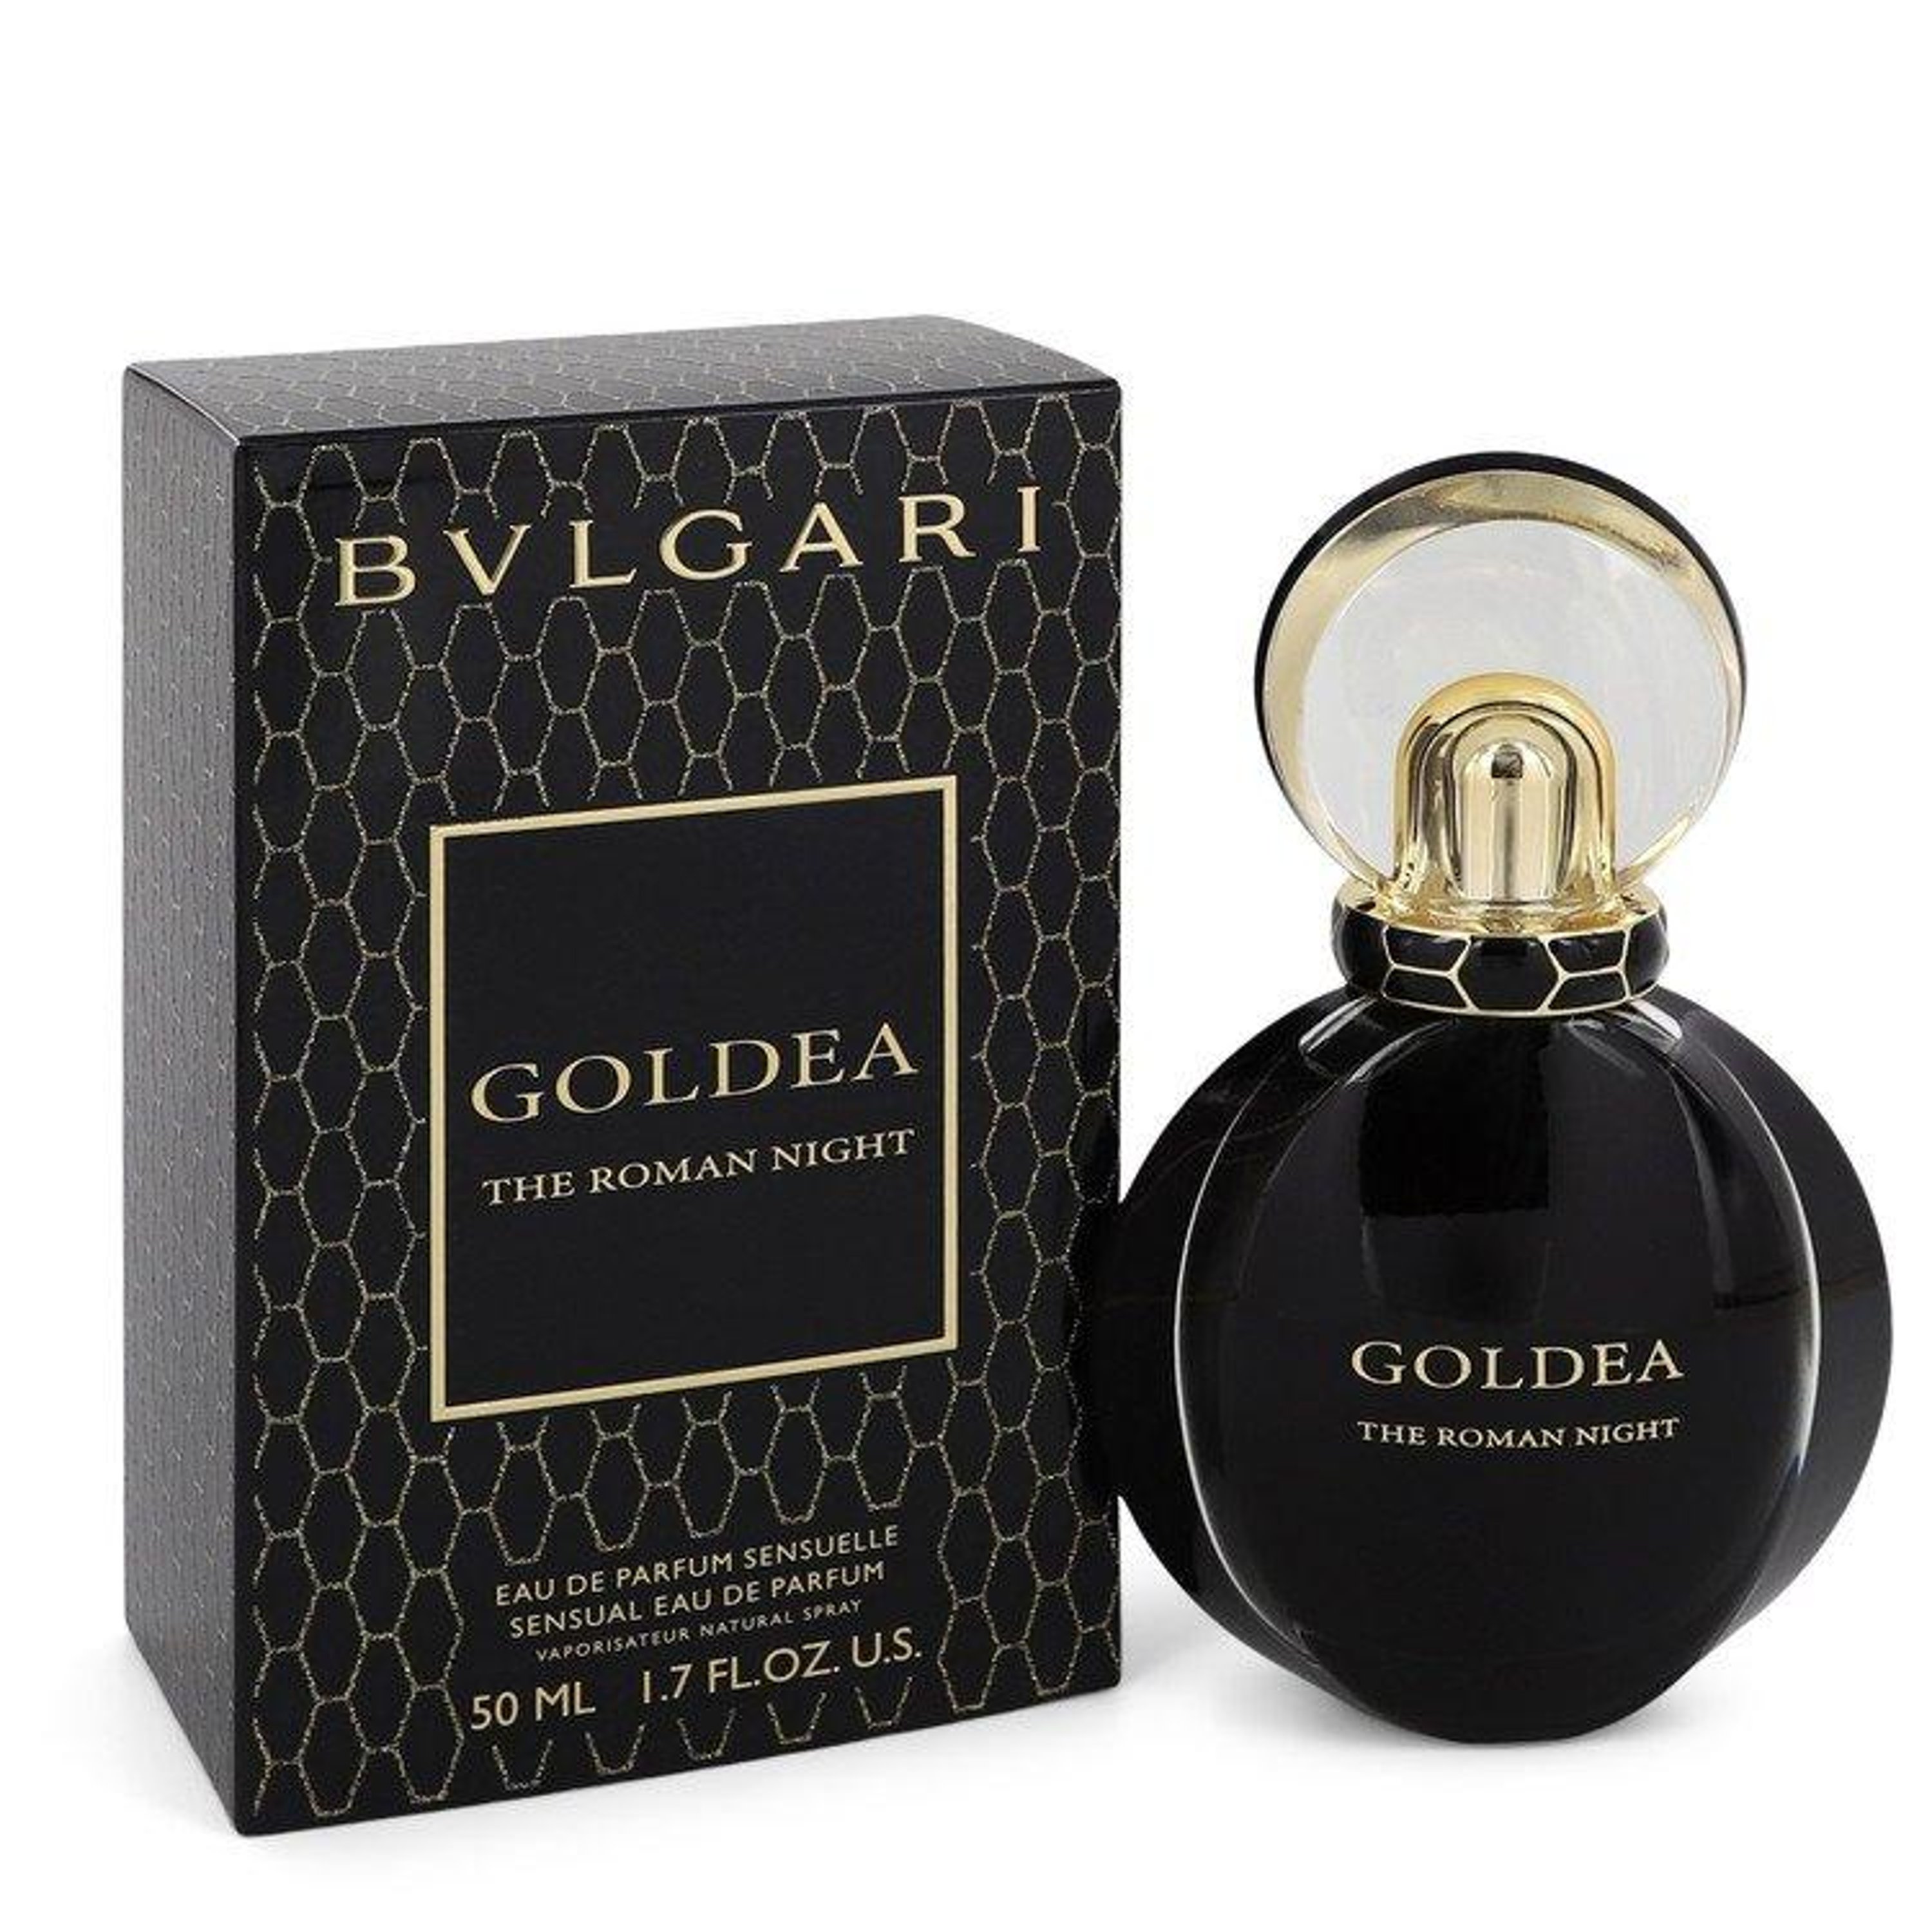 Bvlgari Goldea The Roman Night By  Eau De Parfum Spray 1.7 oz